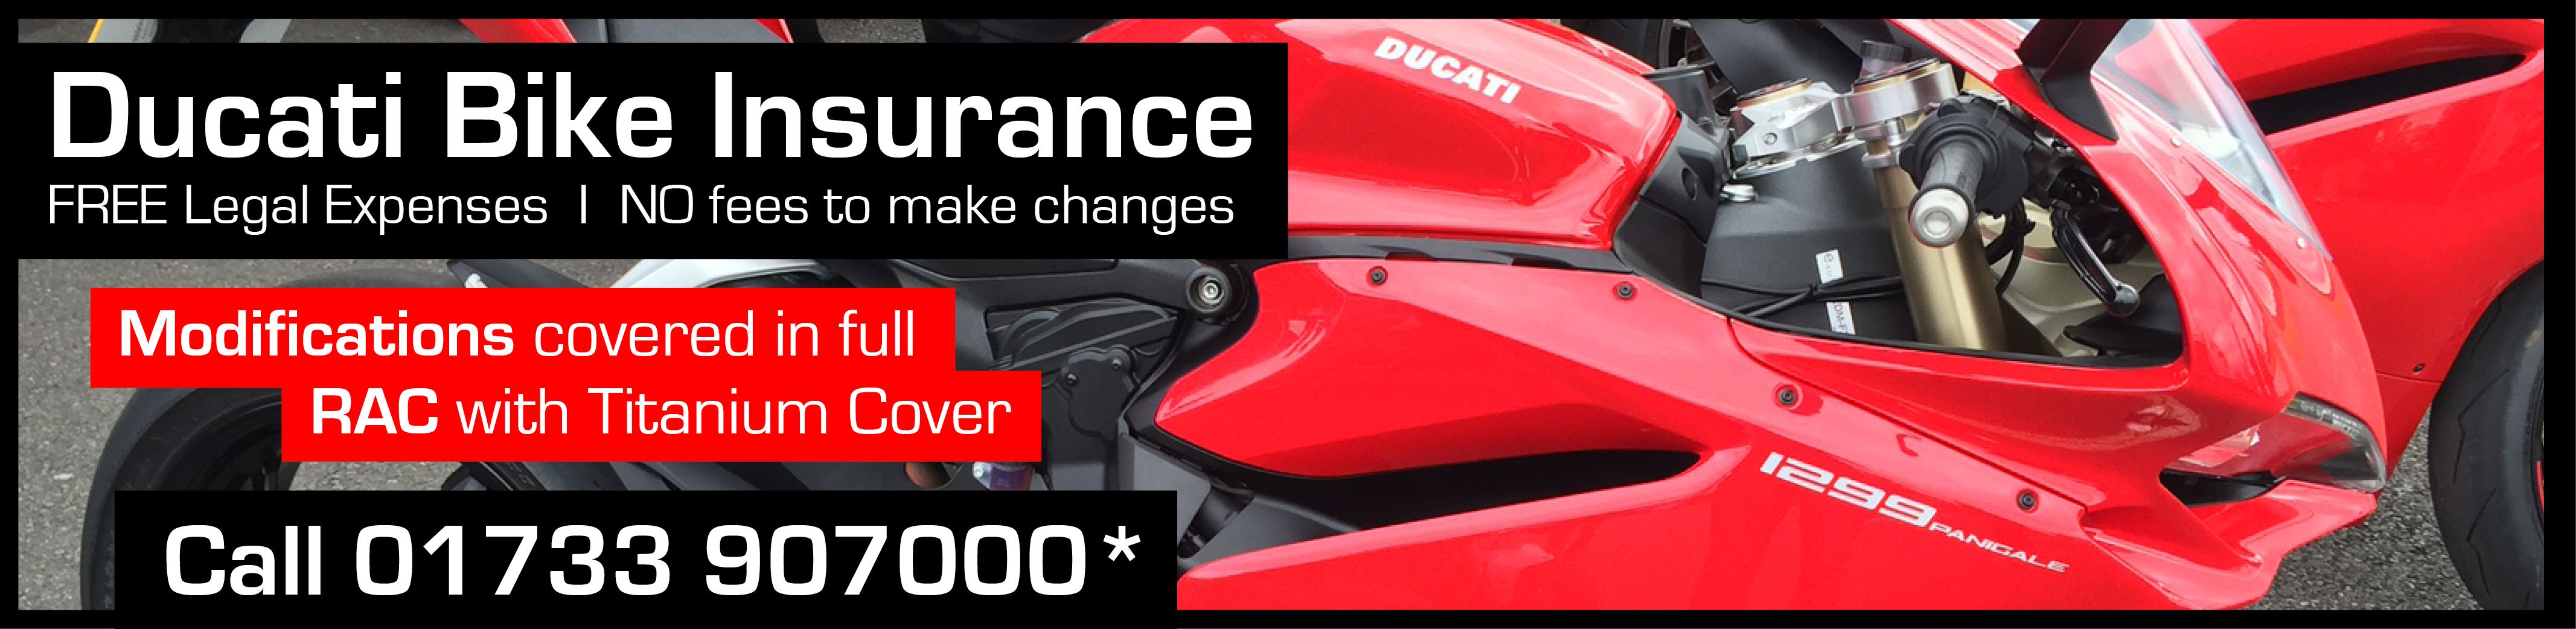 Ducati Bike Insurance